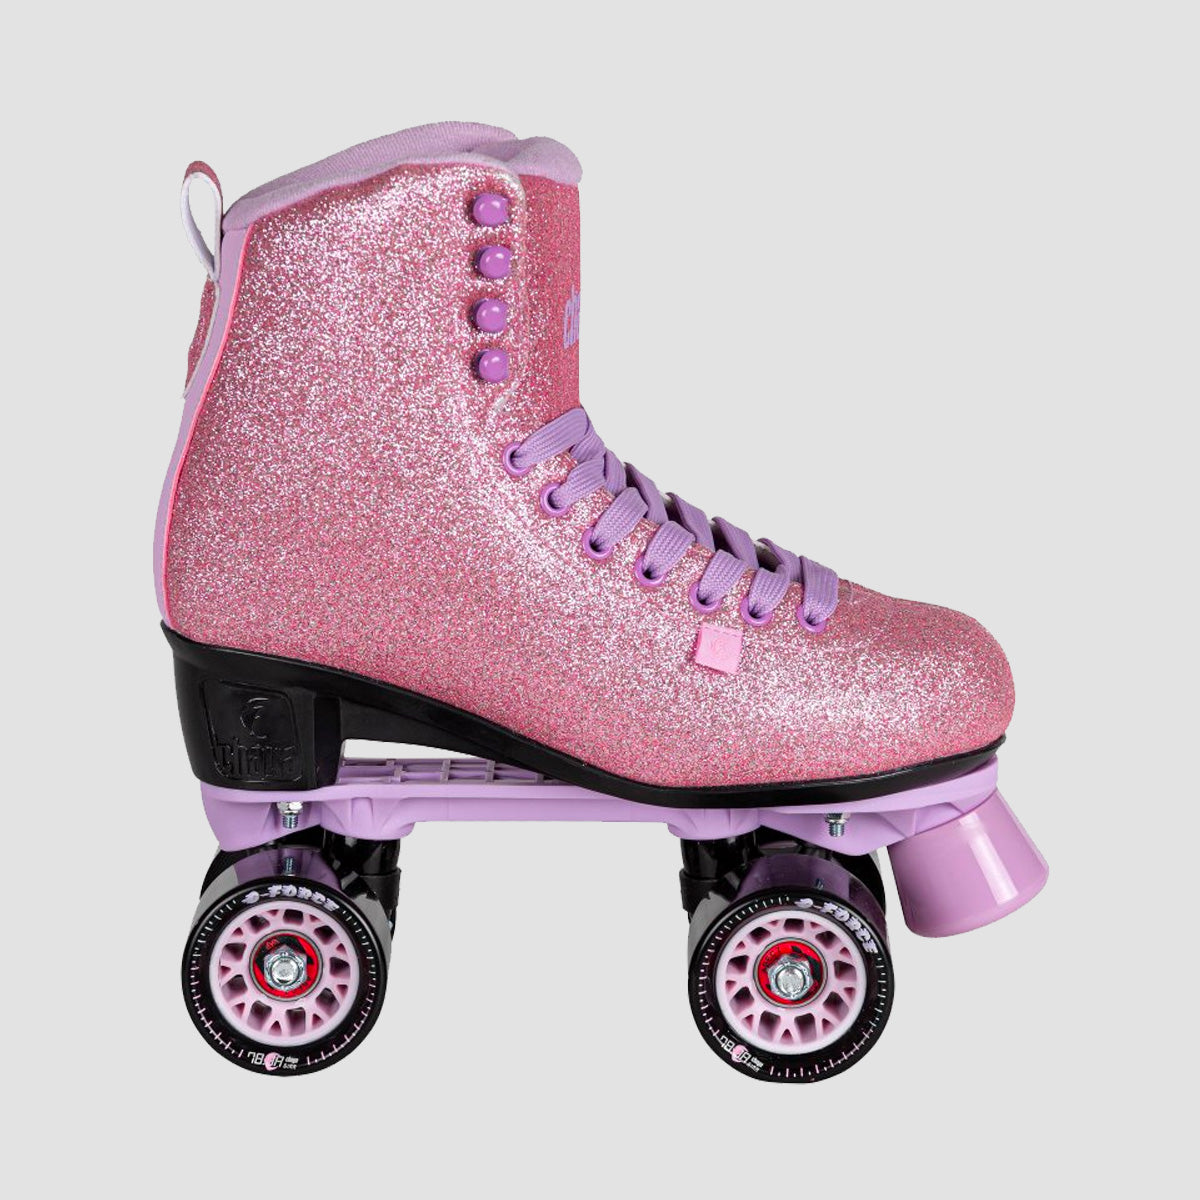 Chaya Lifestyle Melrose Quad Skates Glitter